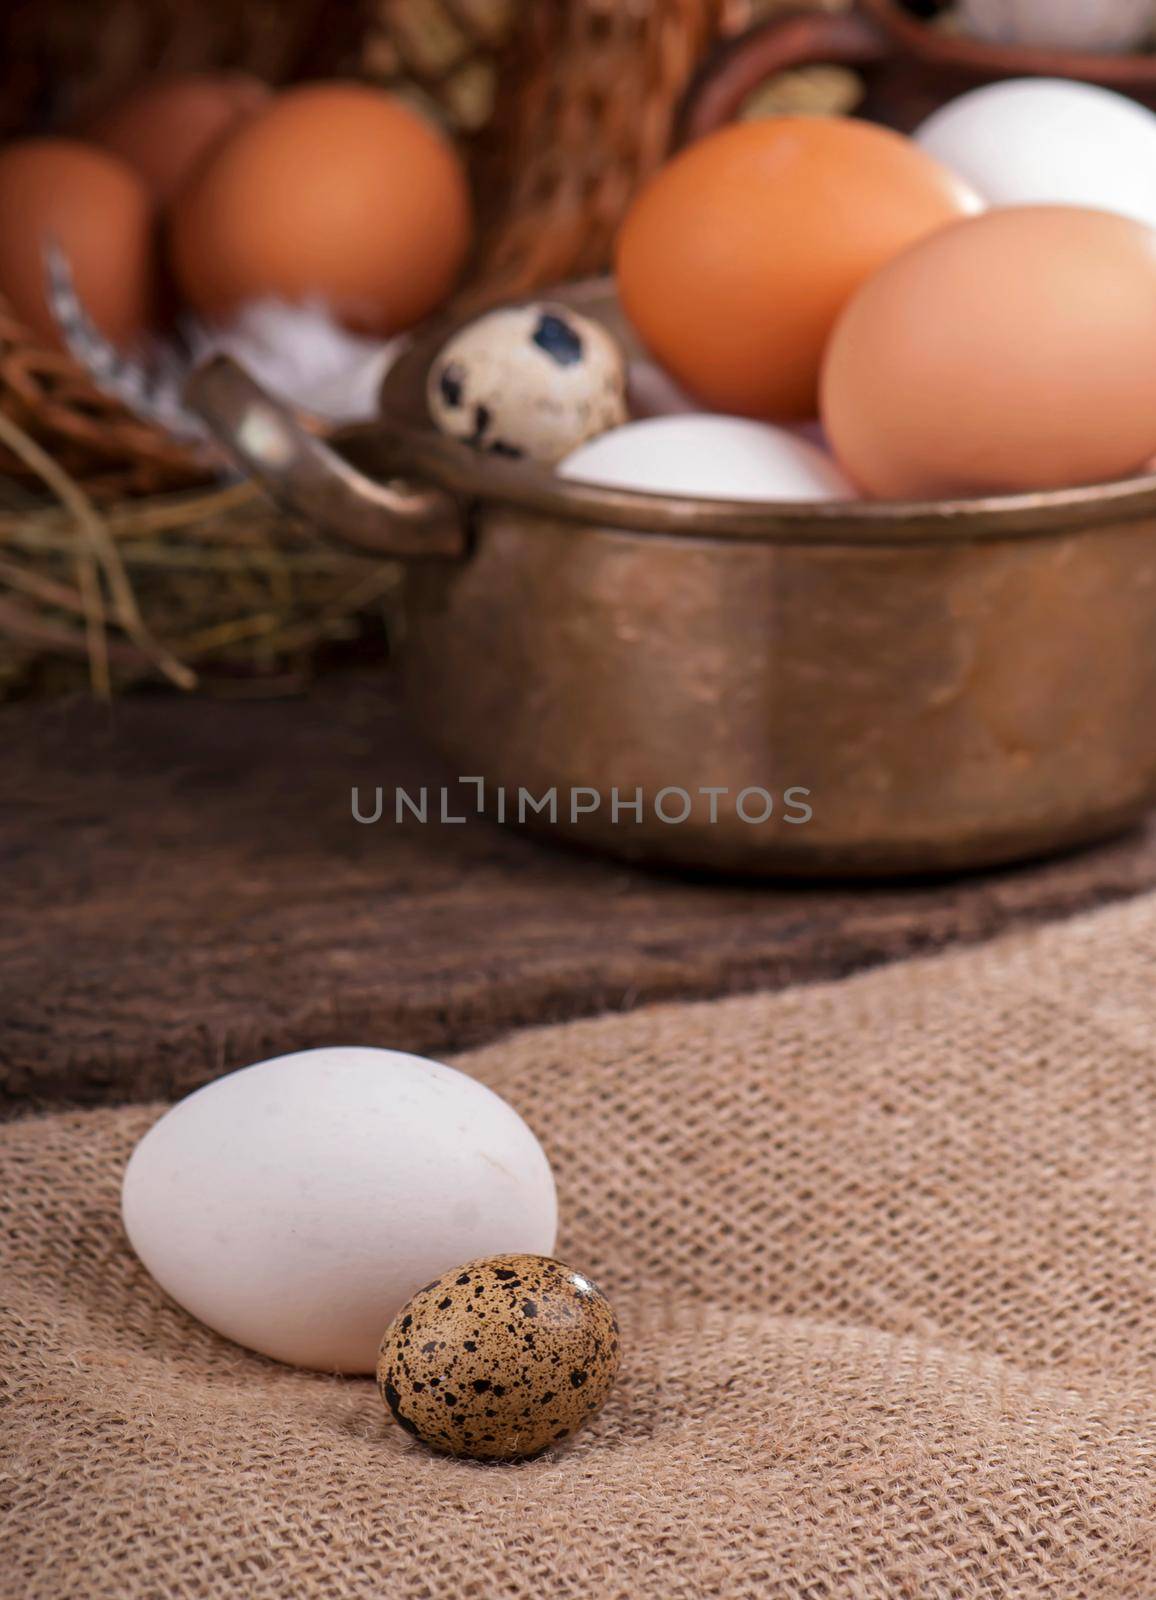 Brown eggs in wooden basket. Broken egg with yolk in background by aprilphoto